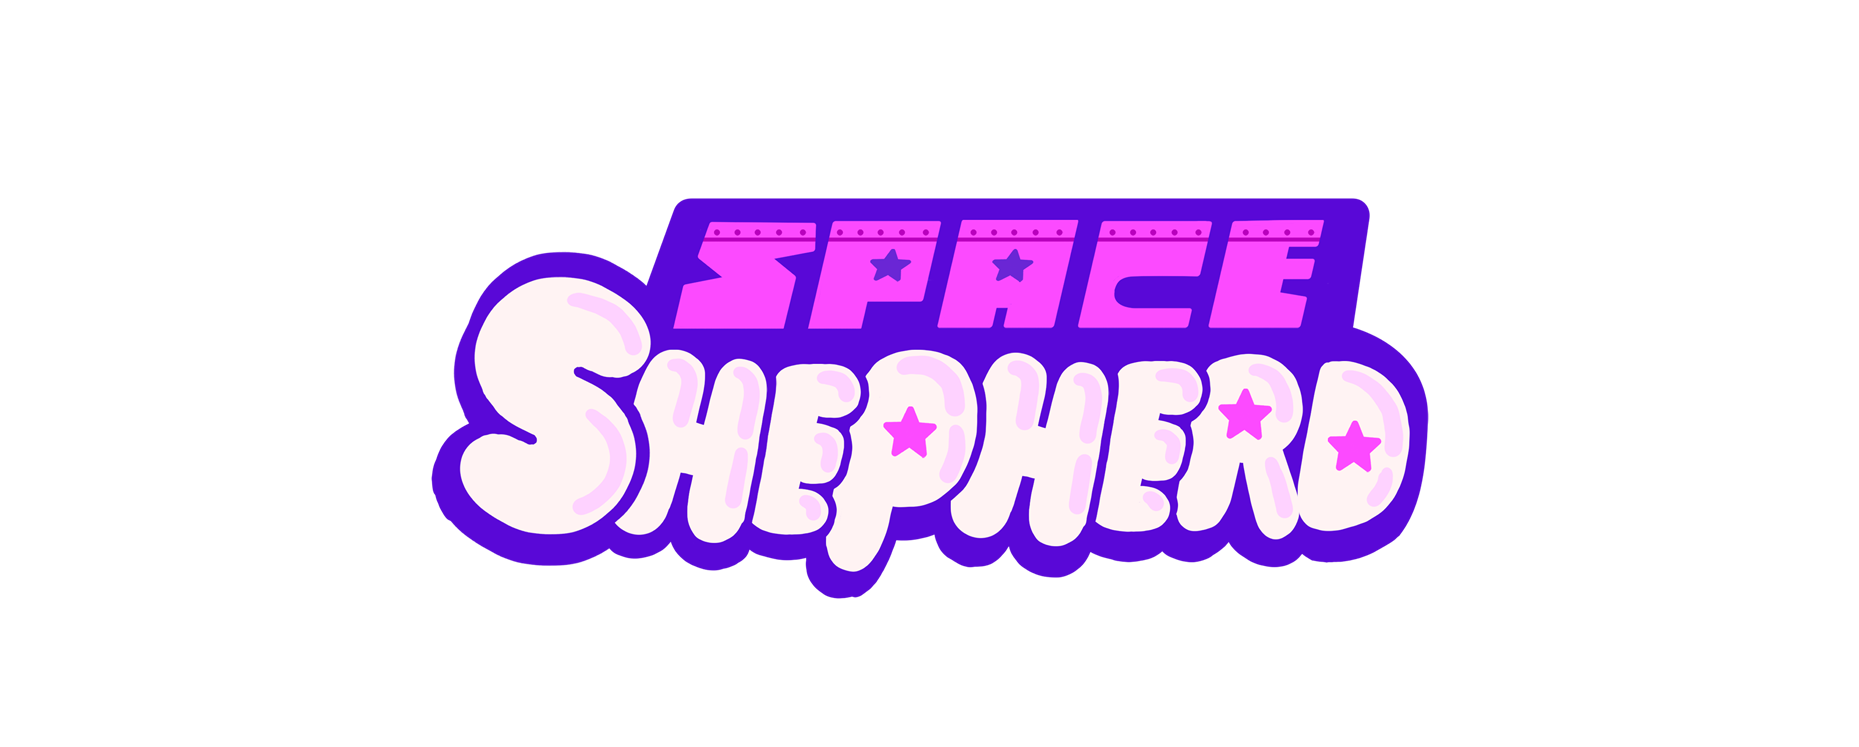 Space Shepherd